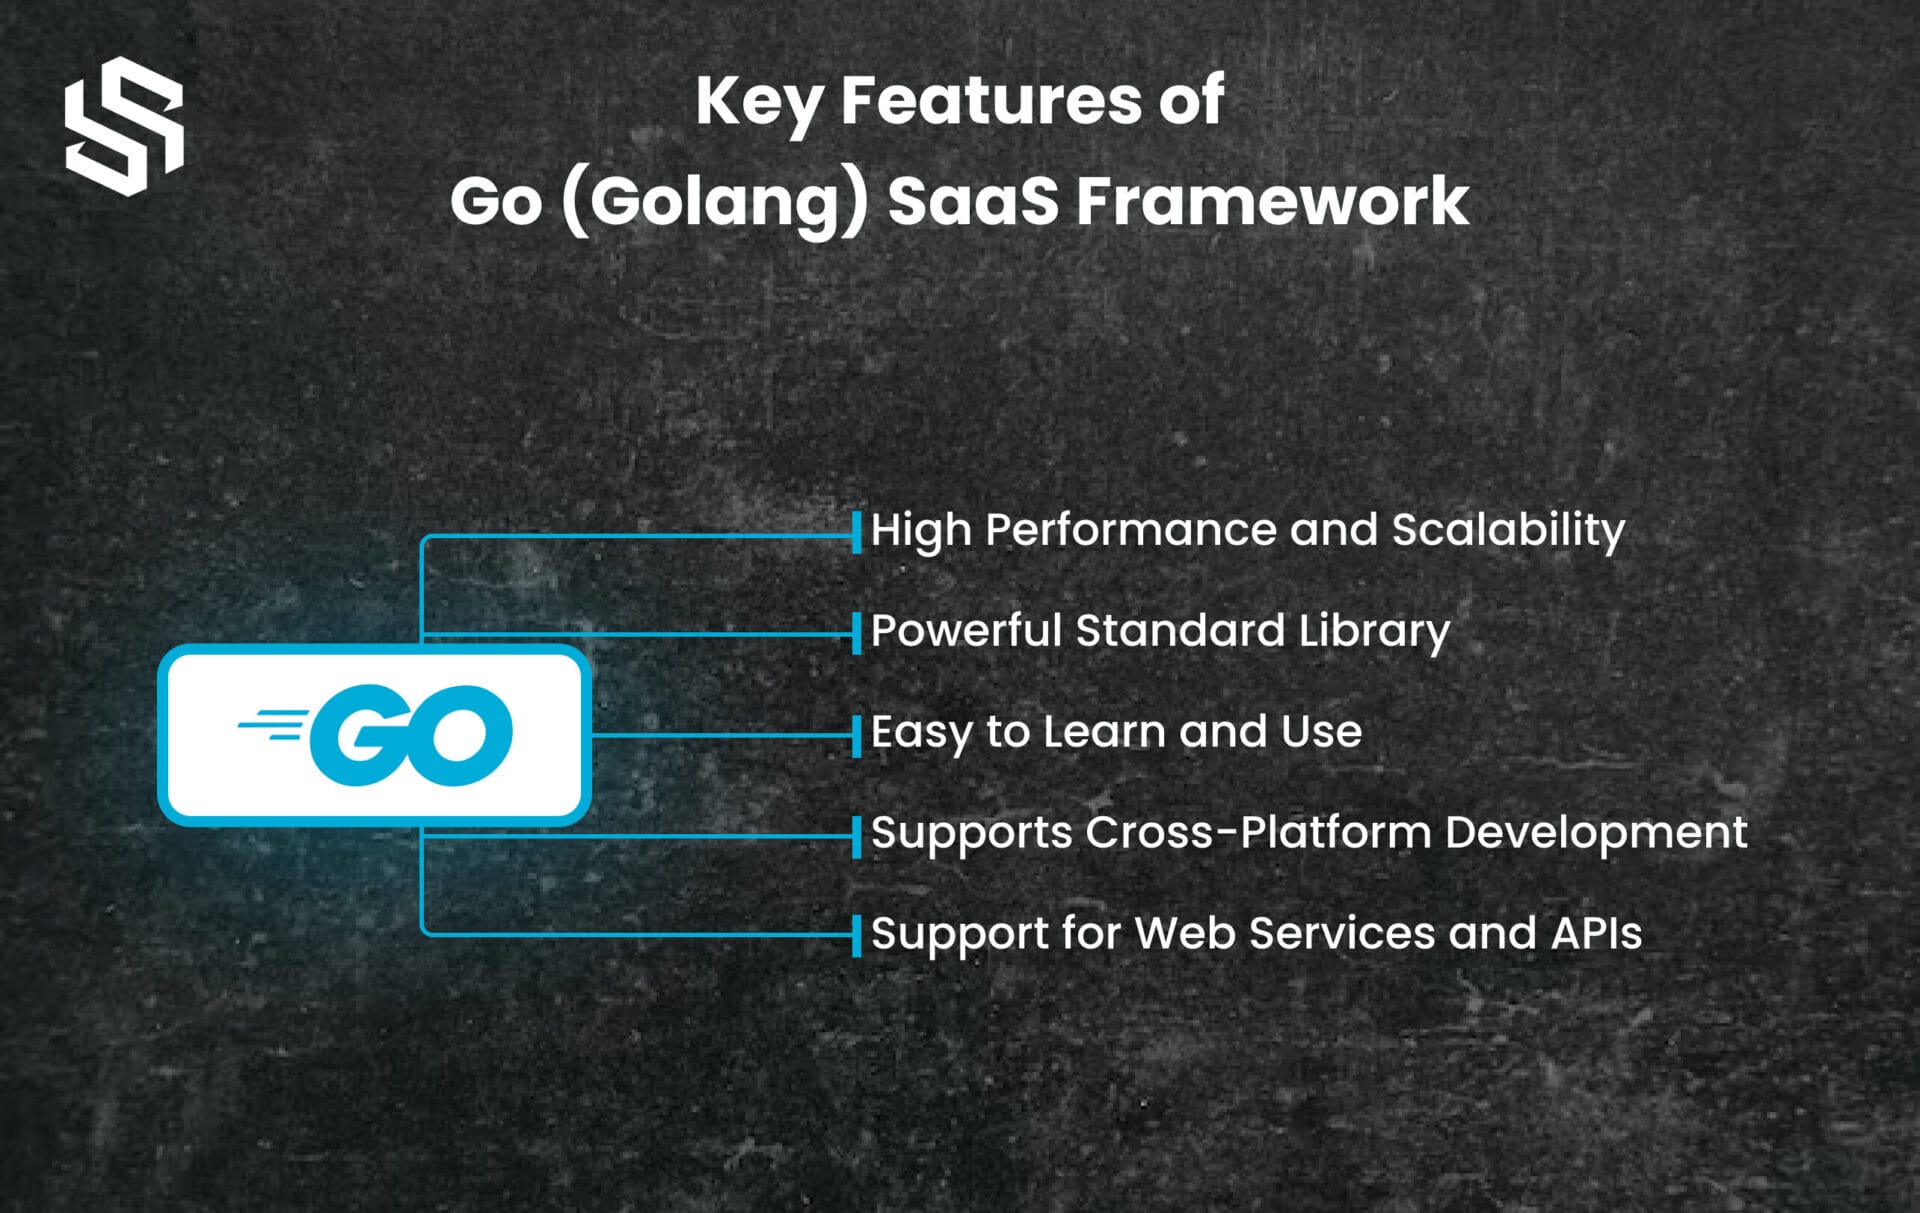 Key Features of Go (Golang) Framework